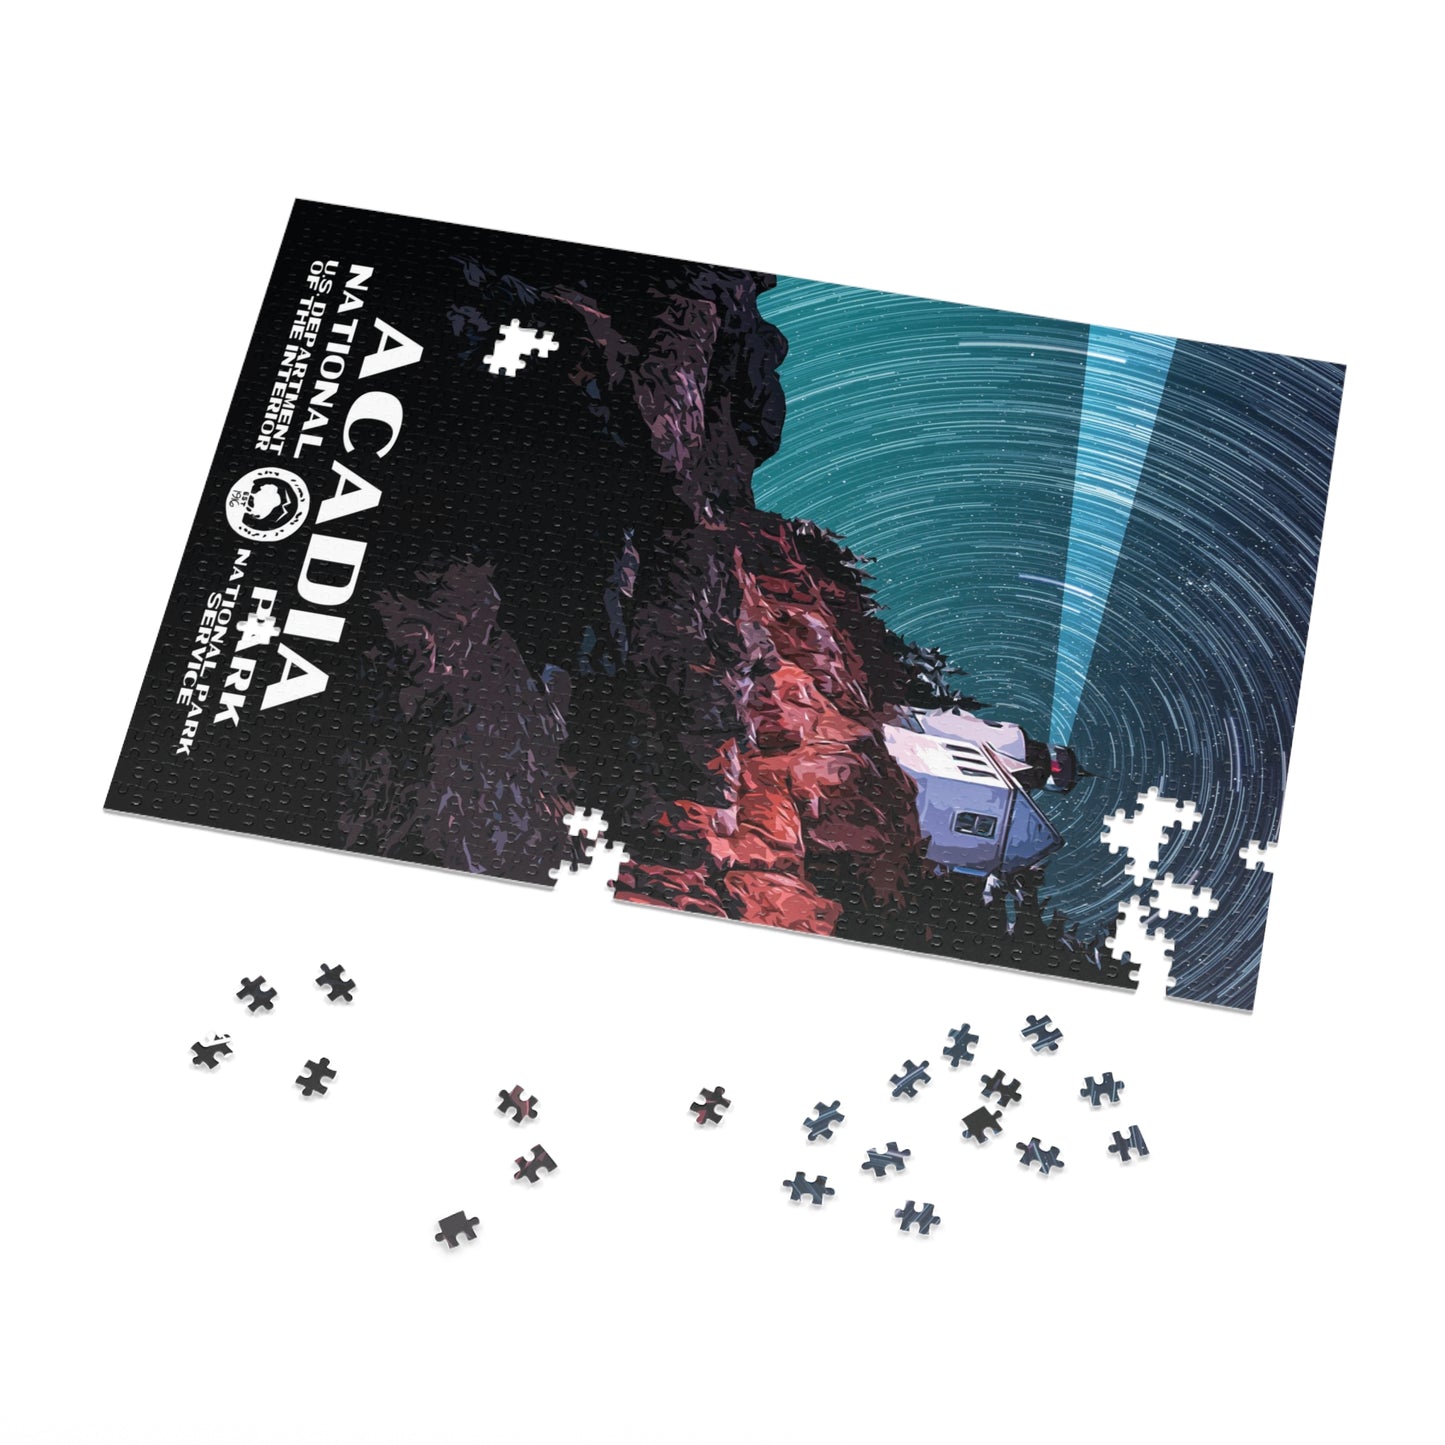 Acadia National Park Jigsaw Puzzle - 1000 Pieces